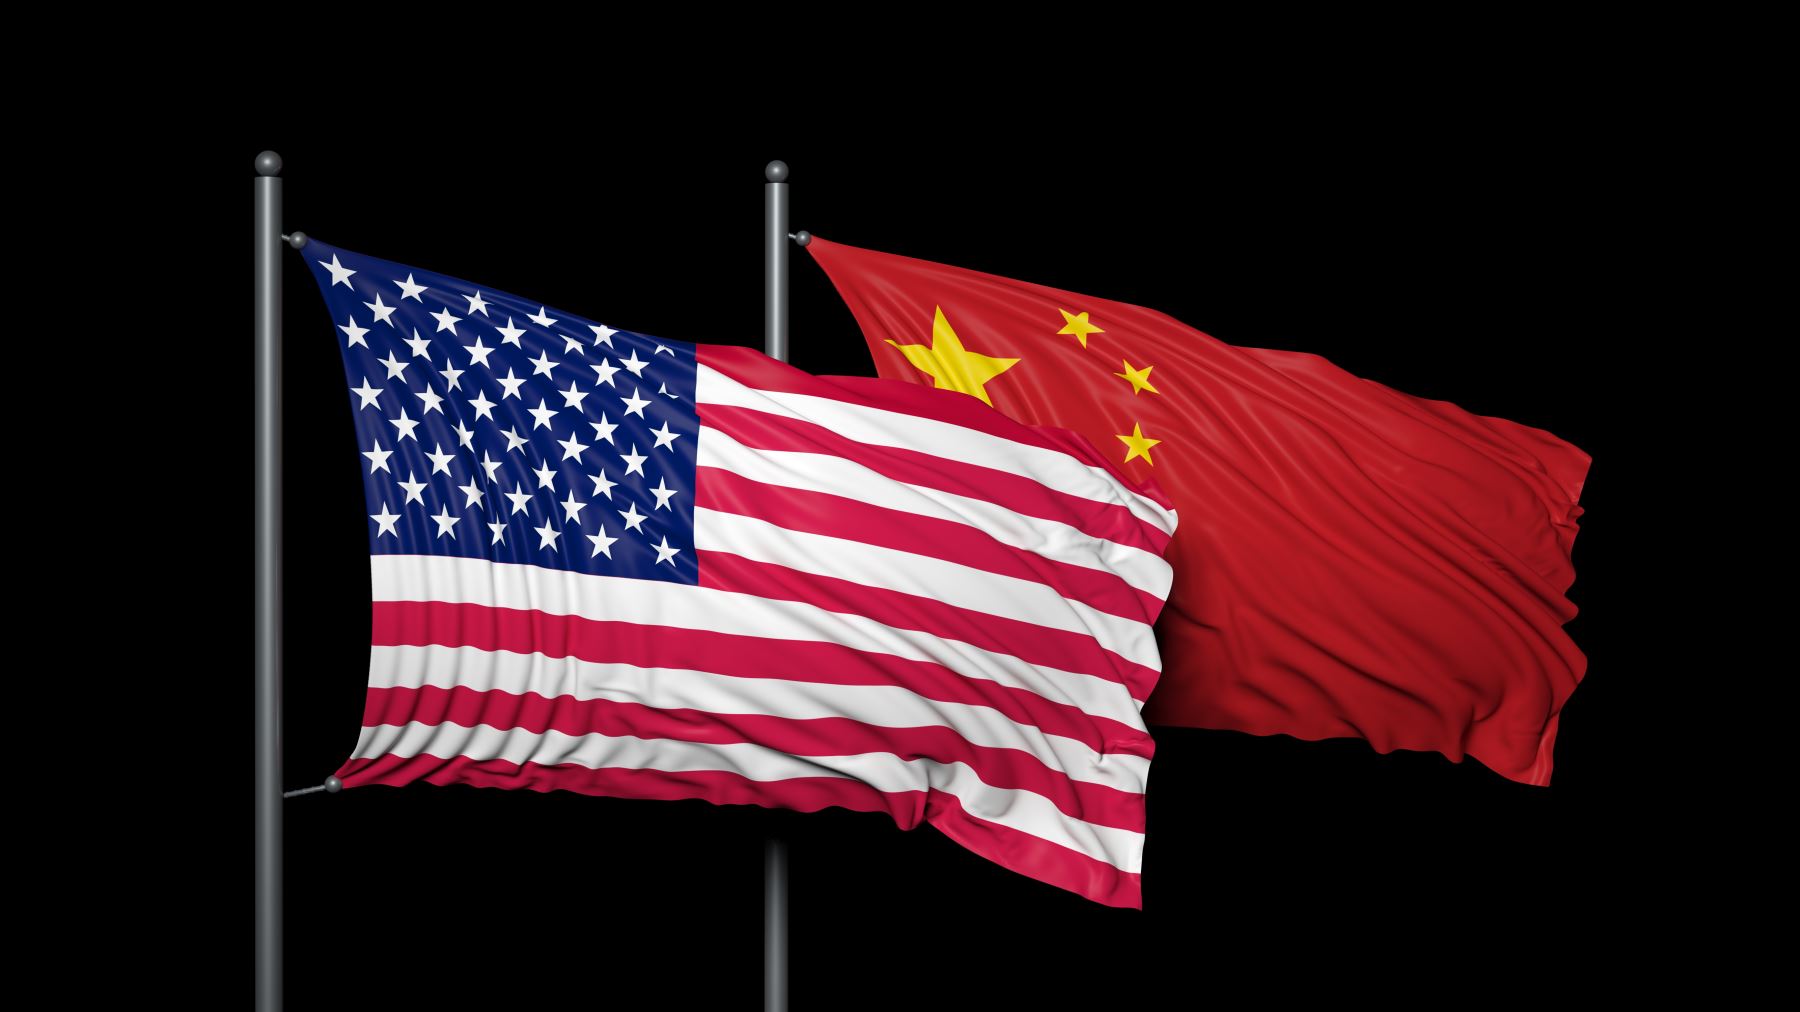 China espera que crezca su comercio exterior pese a guerra comercial con EEUU